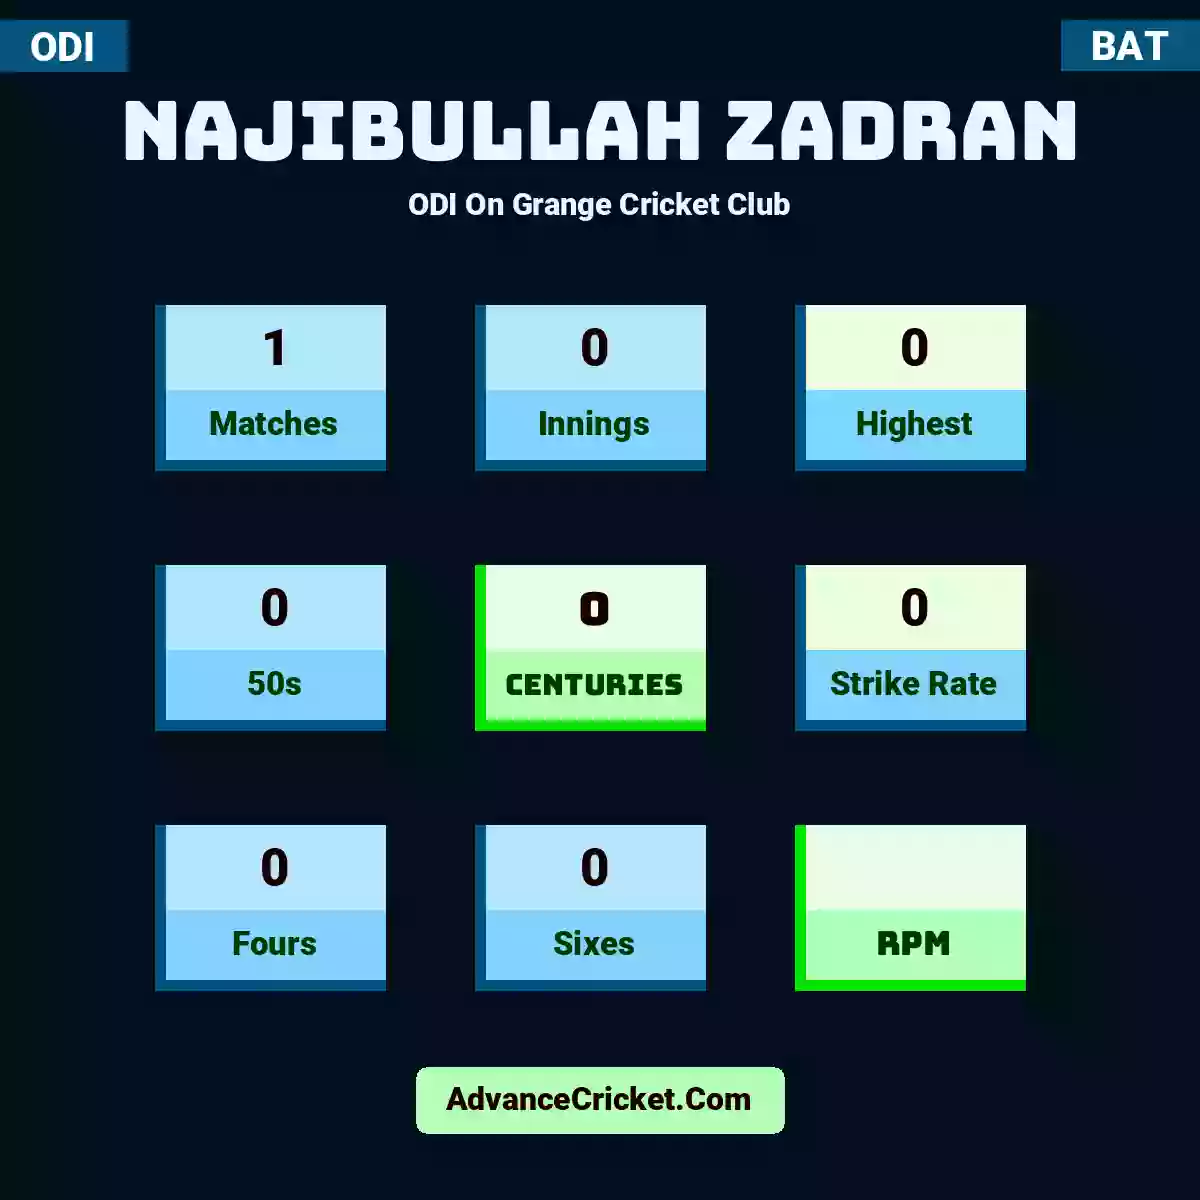 Najibullah Zadran ODI  On Grange Cricket Club, Najibullah Zadran played 1 matches, scored 0 runs as highest, 0 half-centuries, and 0 centuries, with a strike rate of 0. N.Zadran hit 0 fours and 0 sixes.